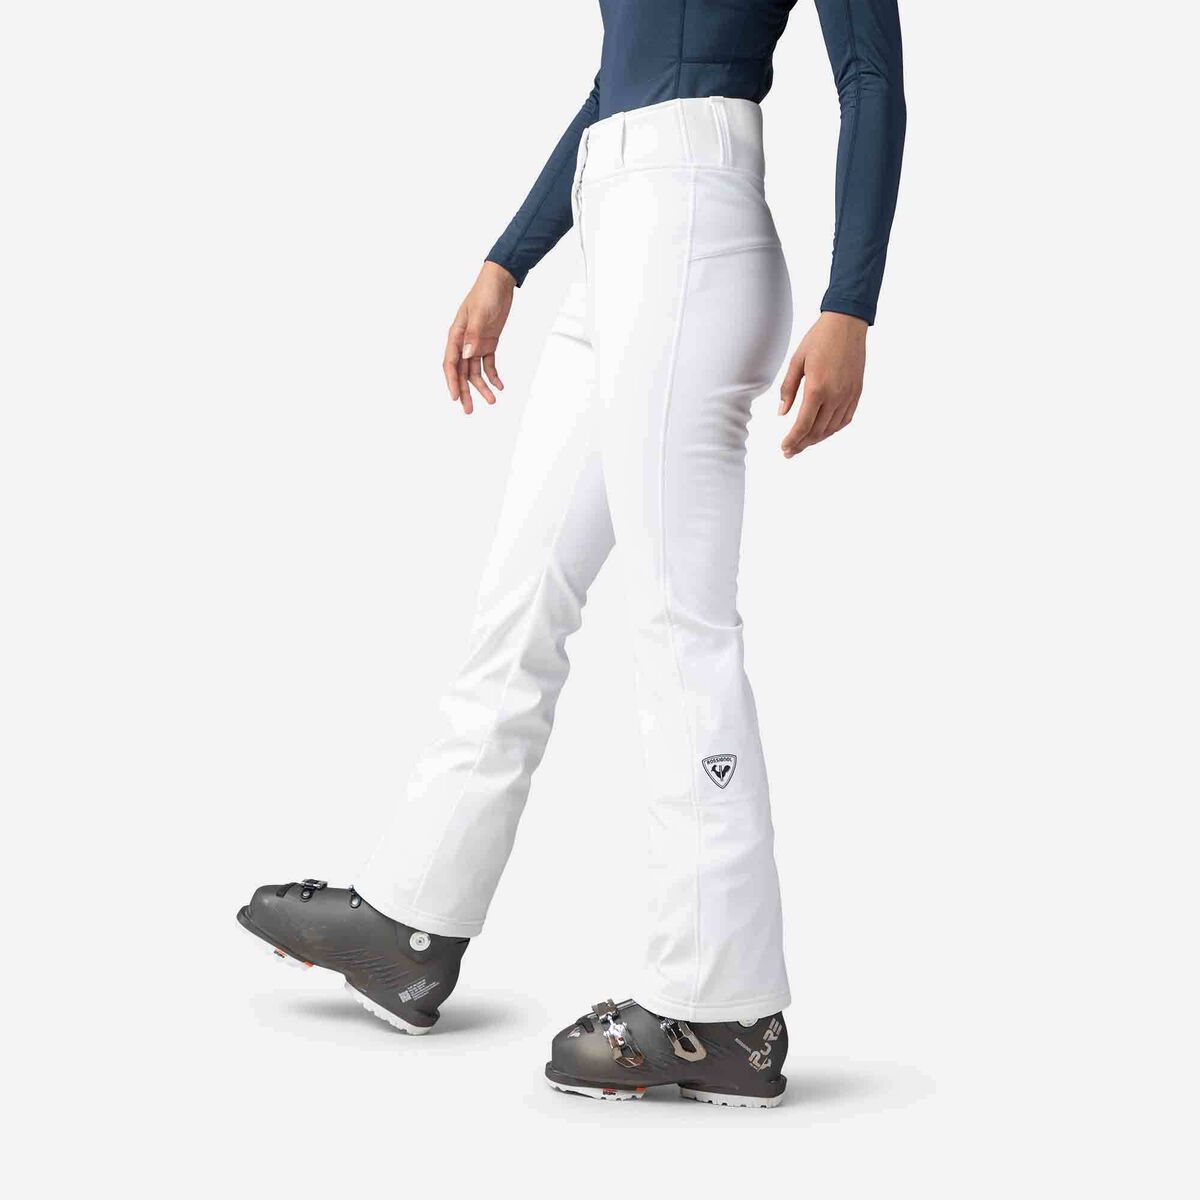 Rossignol Women's Soft Shell Ski pants, Pants Women